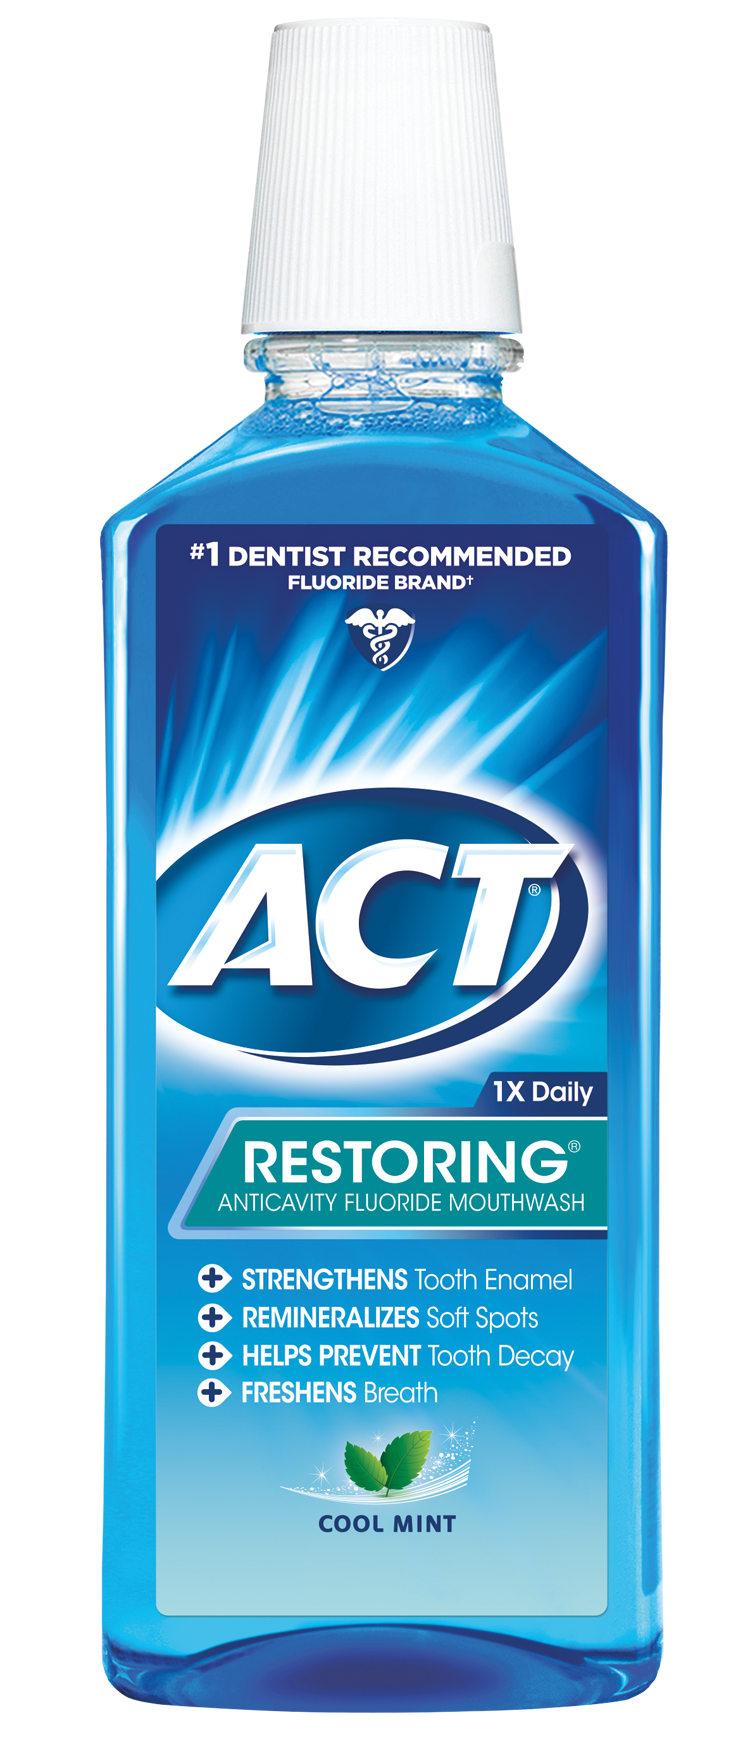 ACT® Cool Mint Restoring™ Anticavity Fluoride Mouthwash